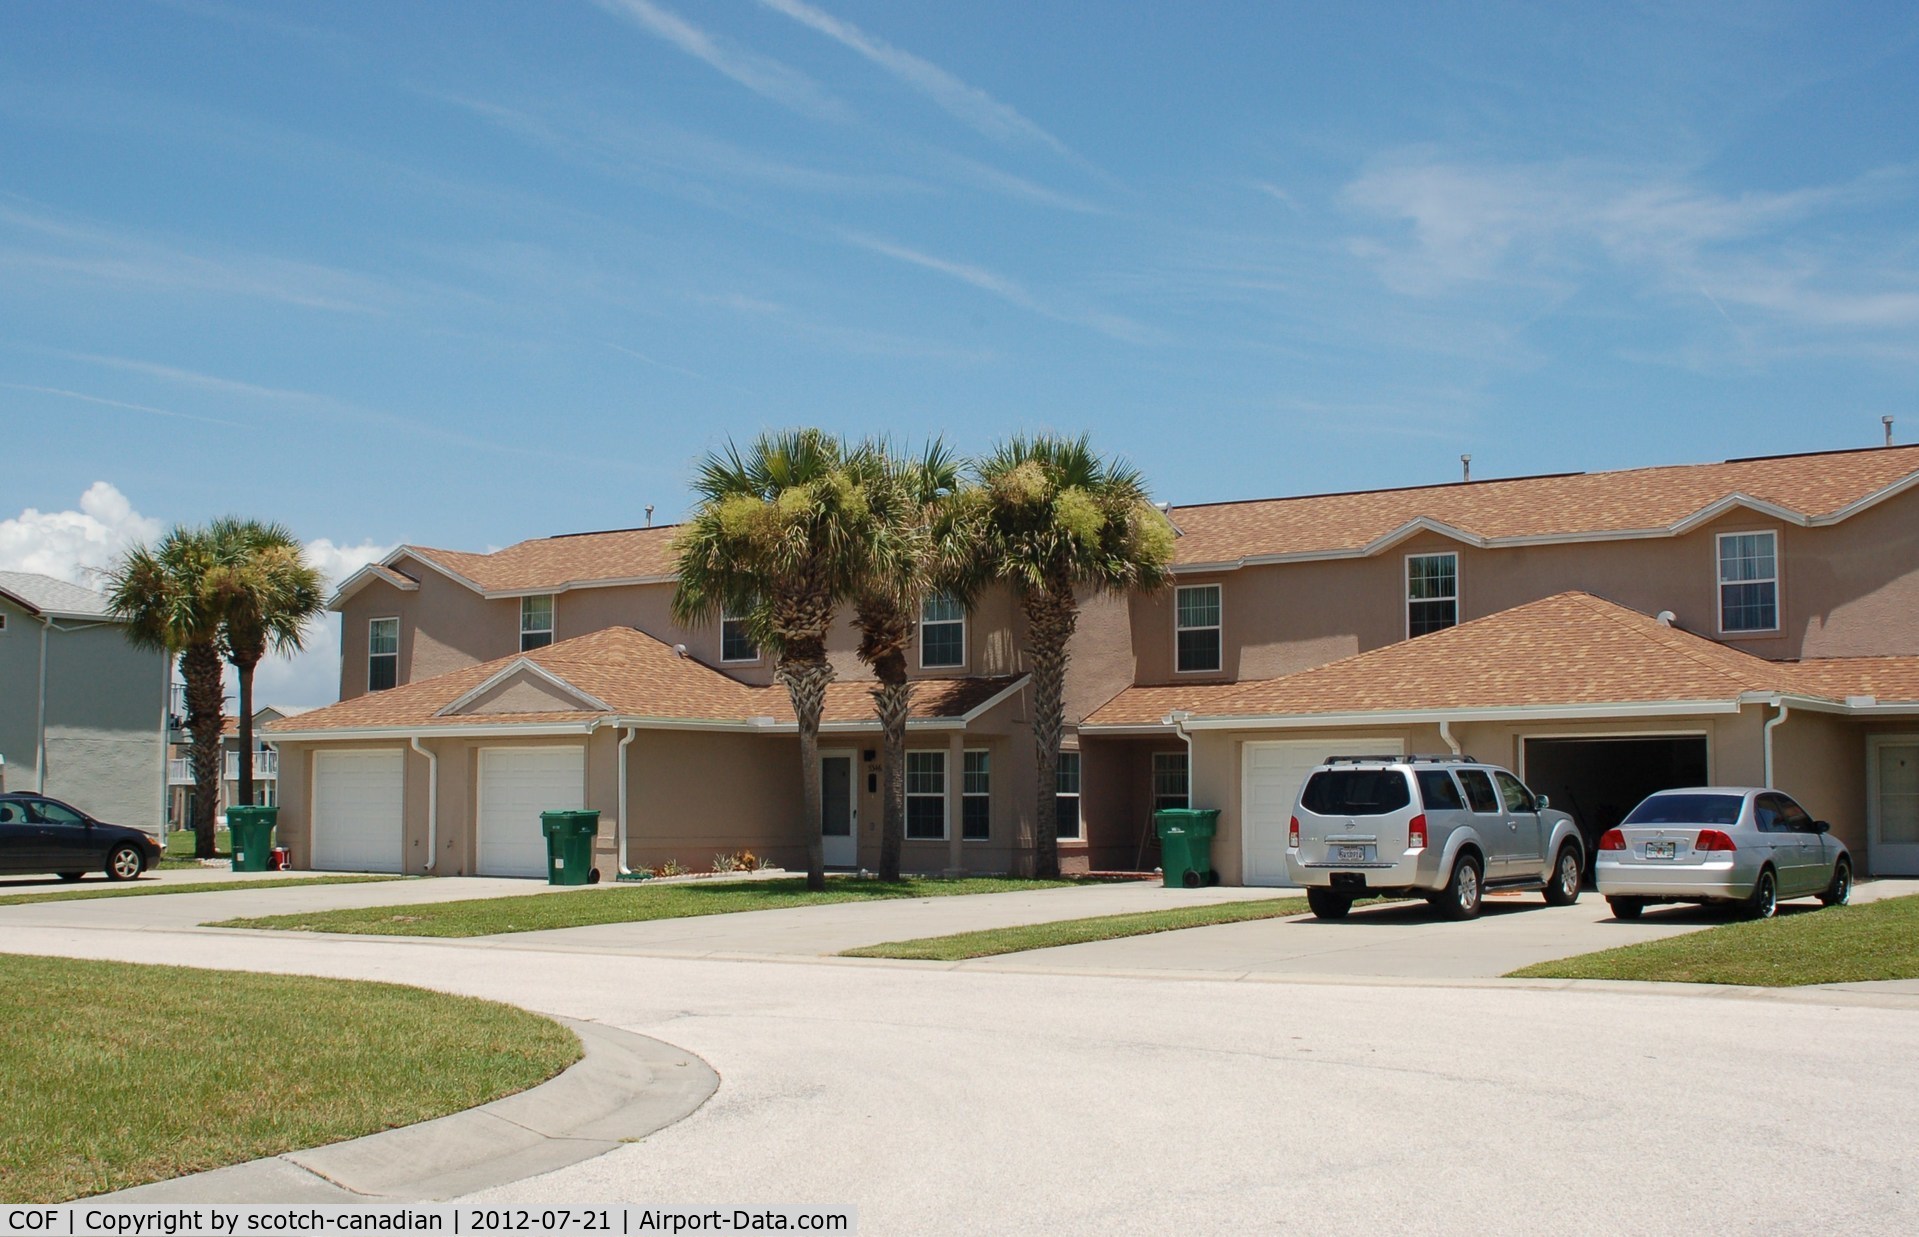 Patrick Afb Airport (COF) - Central Housing at Patrick Air Force Base, FL 